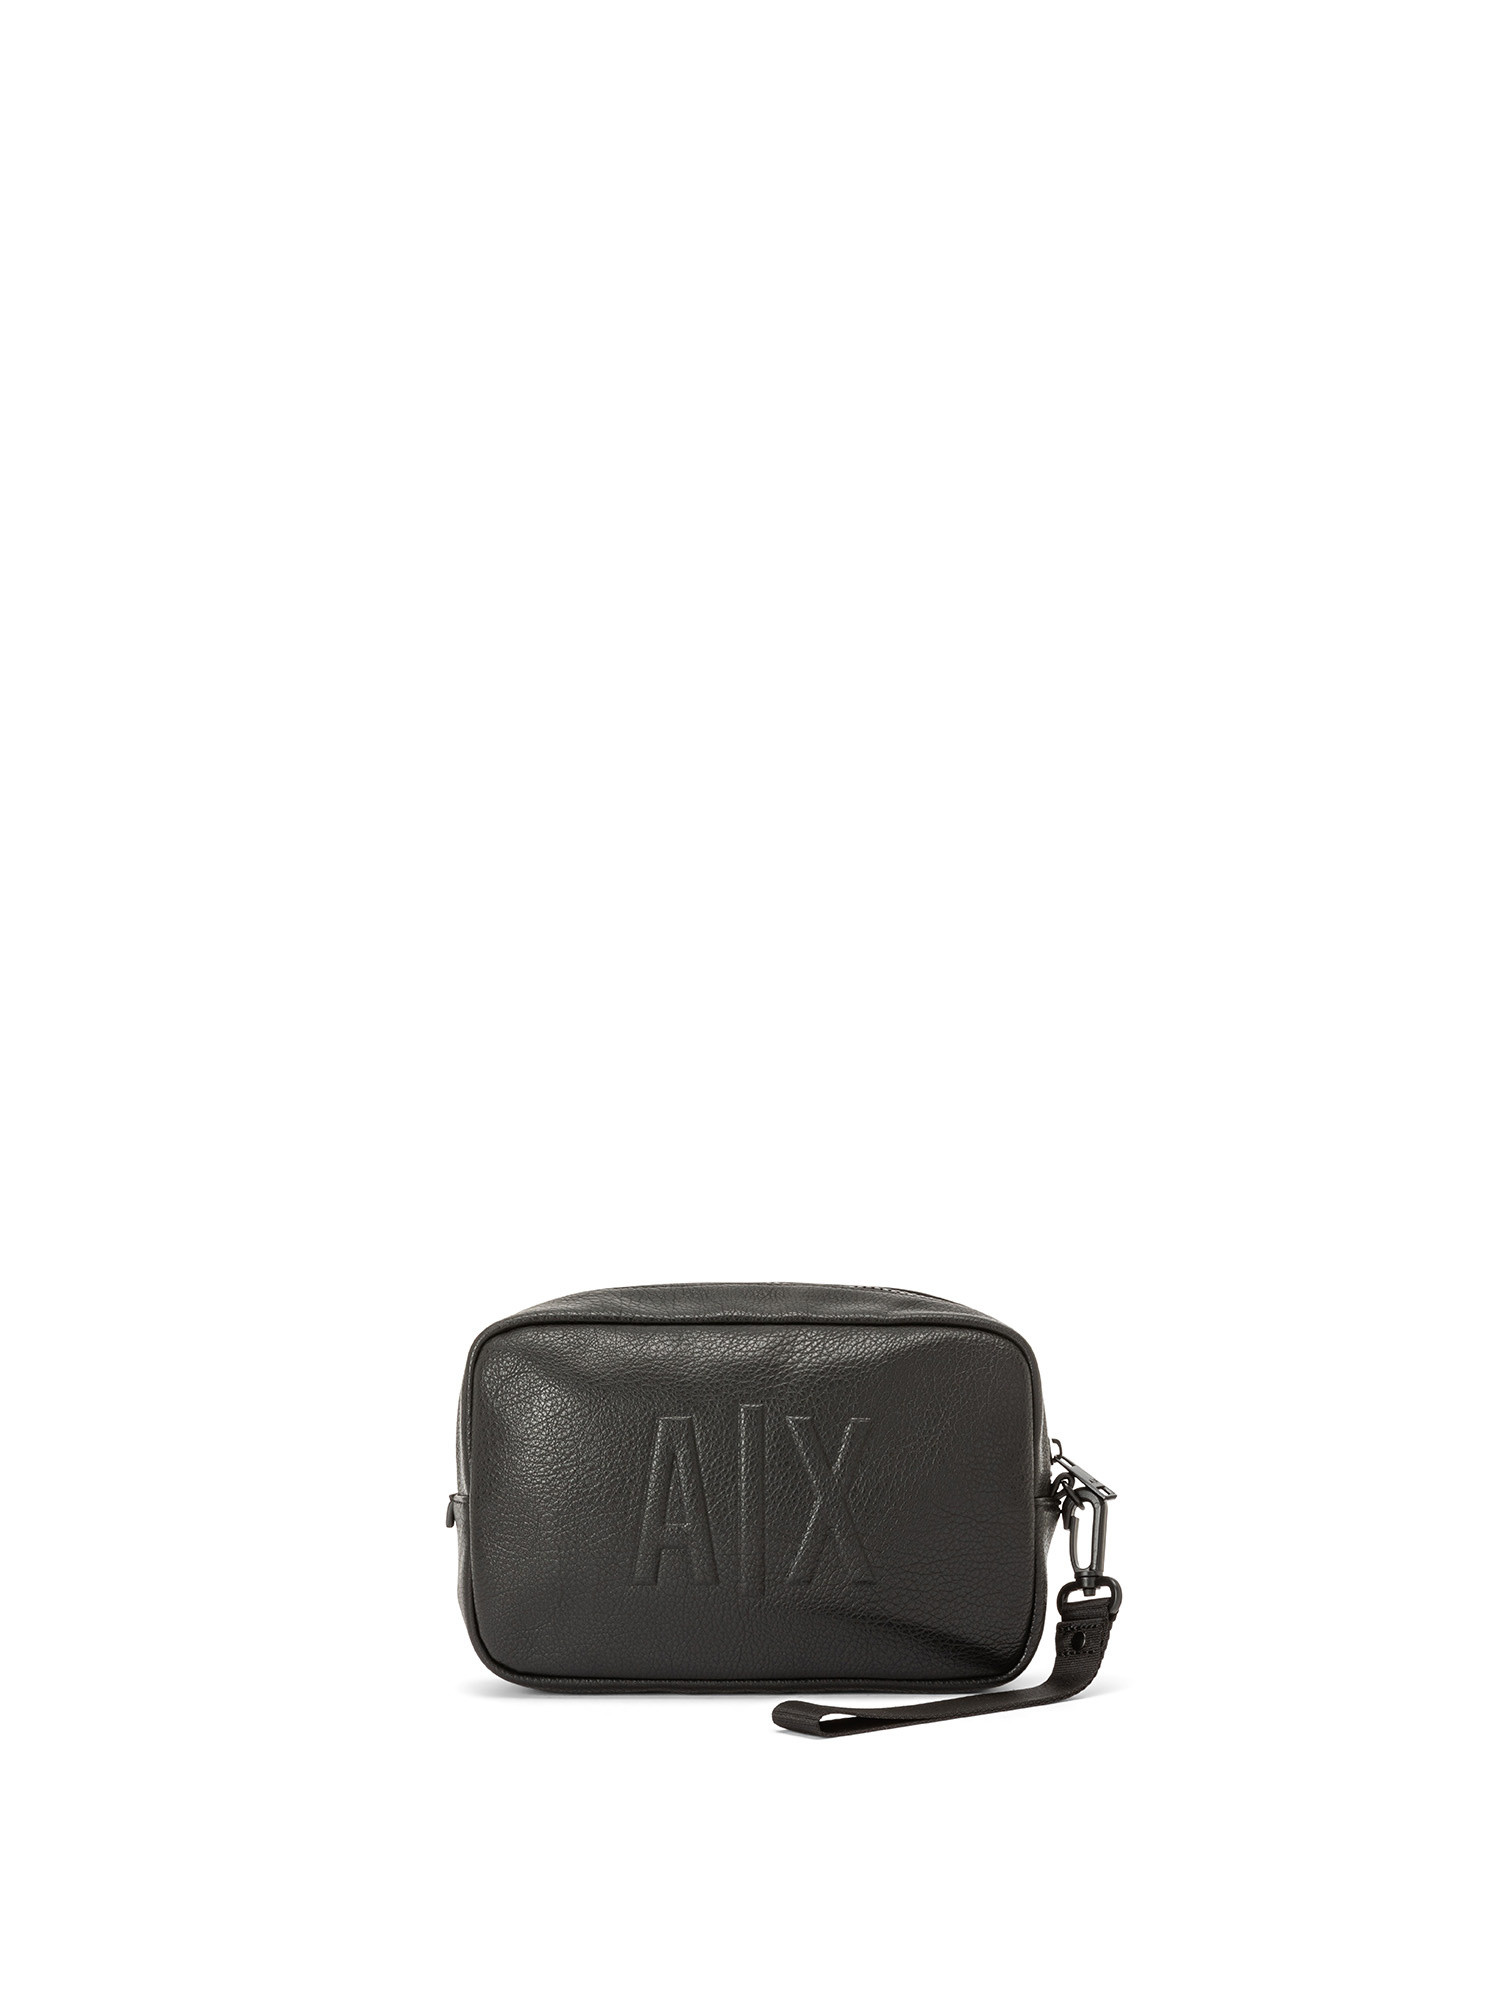 Armani Exchange - Beauty case with logo, Black, large image number 0